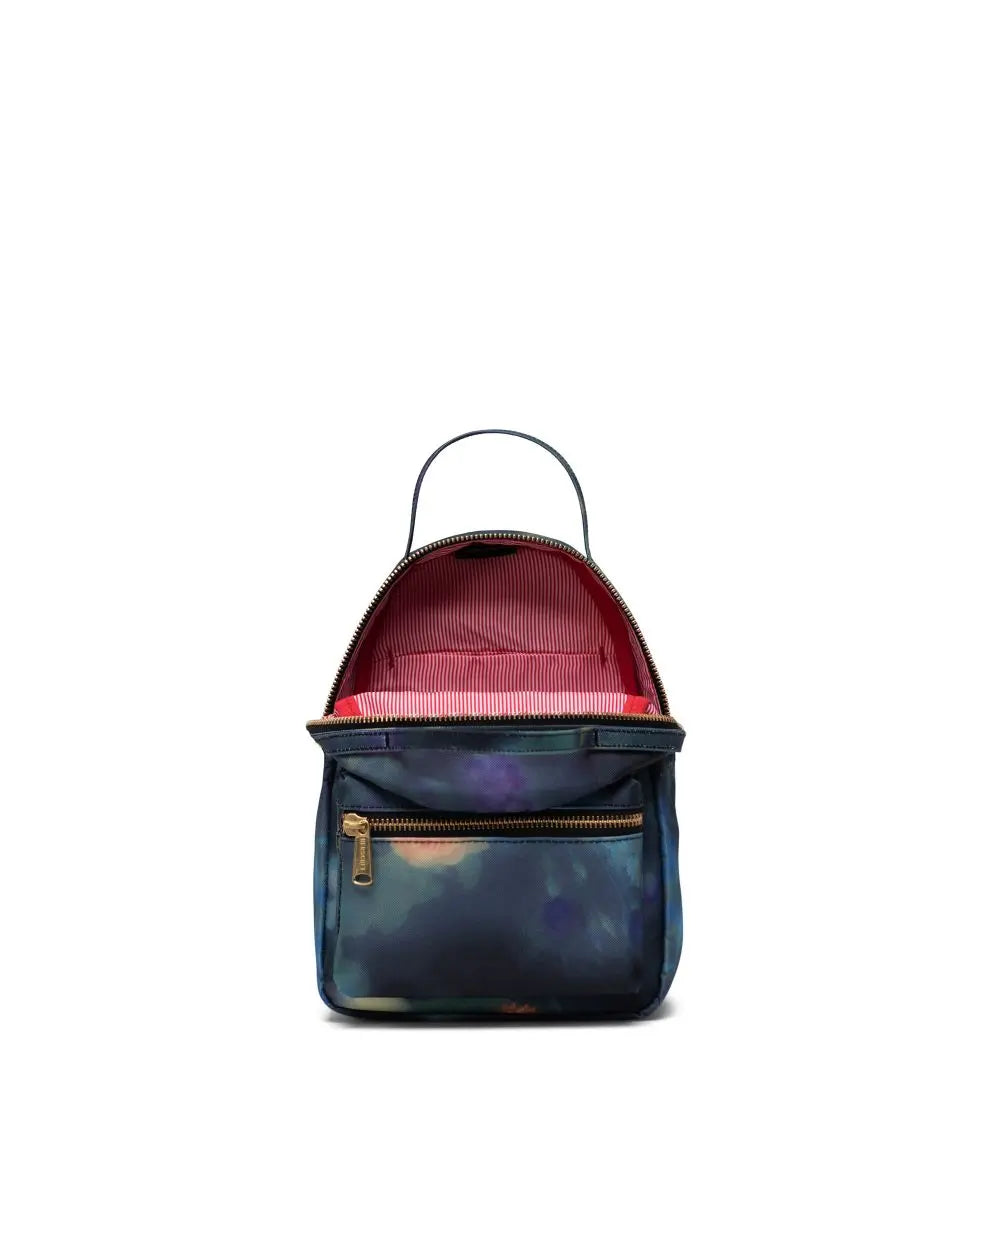 Herschel Nova Mini Backpack x Floral Mist